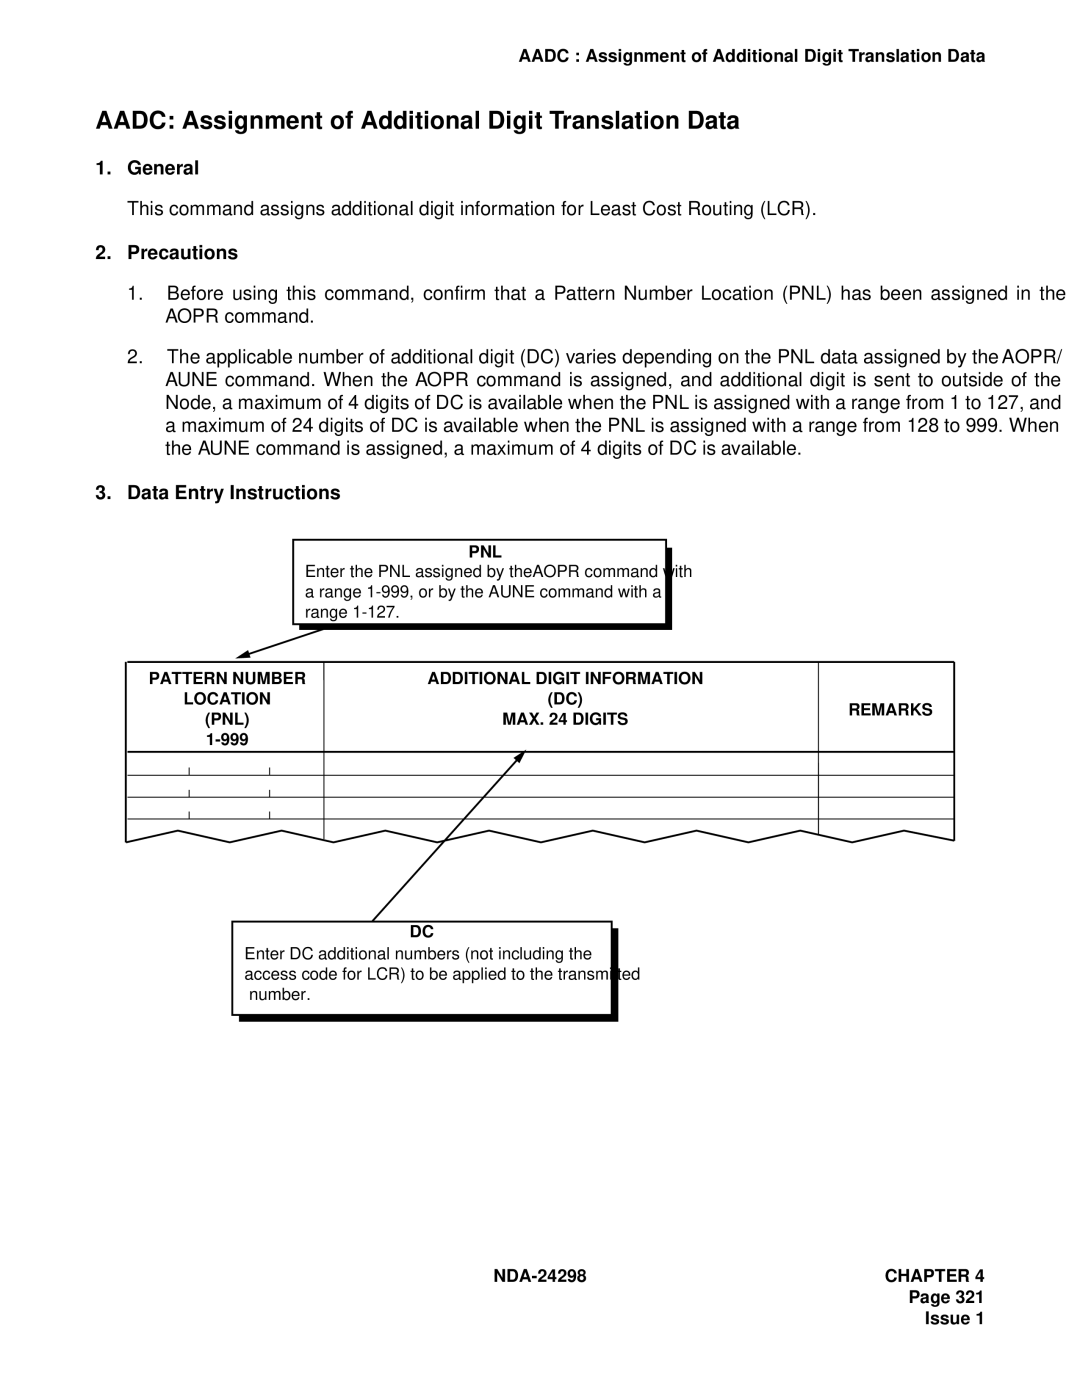 NEC NDA-24298 manual Aadc Assignment of Additional Digit Translation Data, Pnl, 999 